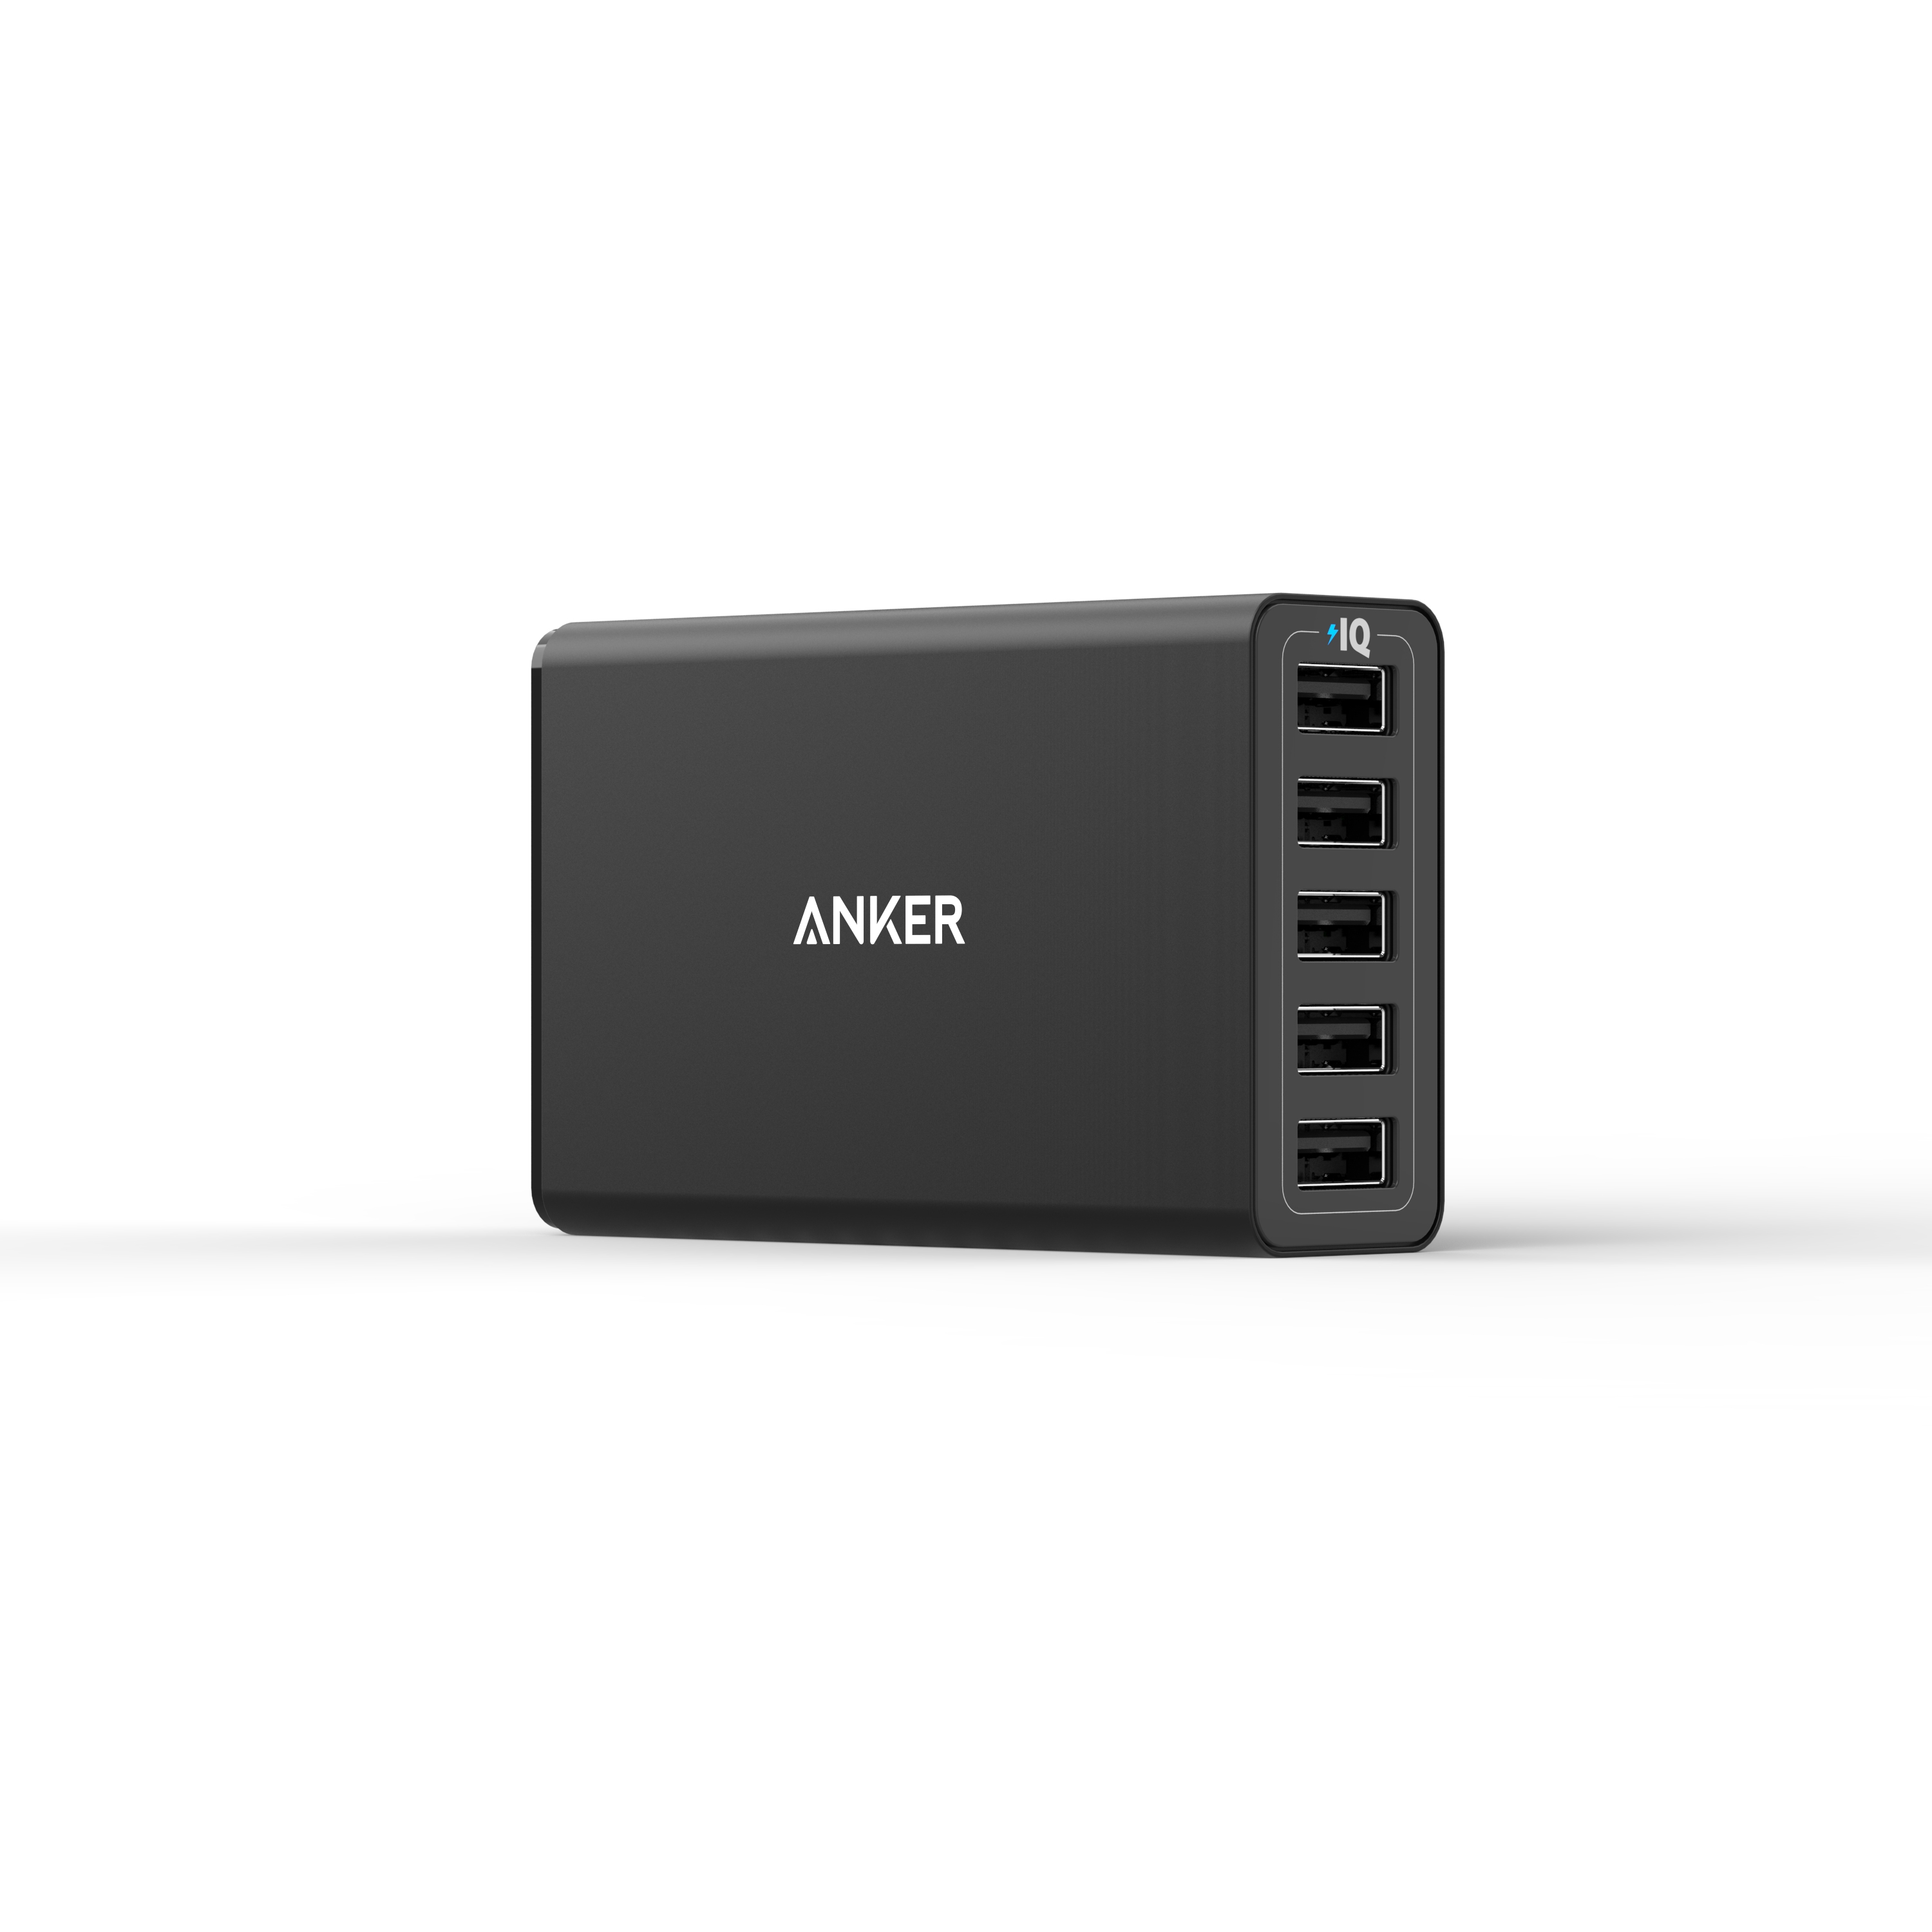 ANKER POWER PORT SPEED 5 5-PORT USB CHARGER – Storefront of Lokopay